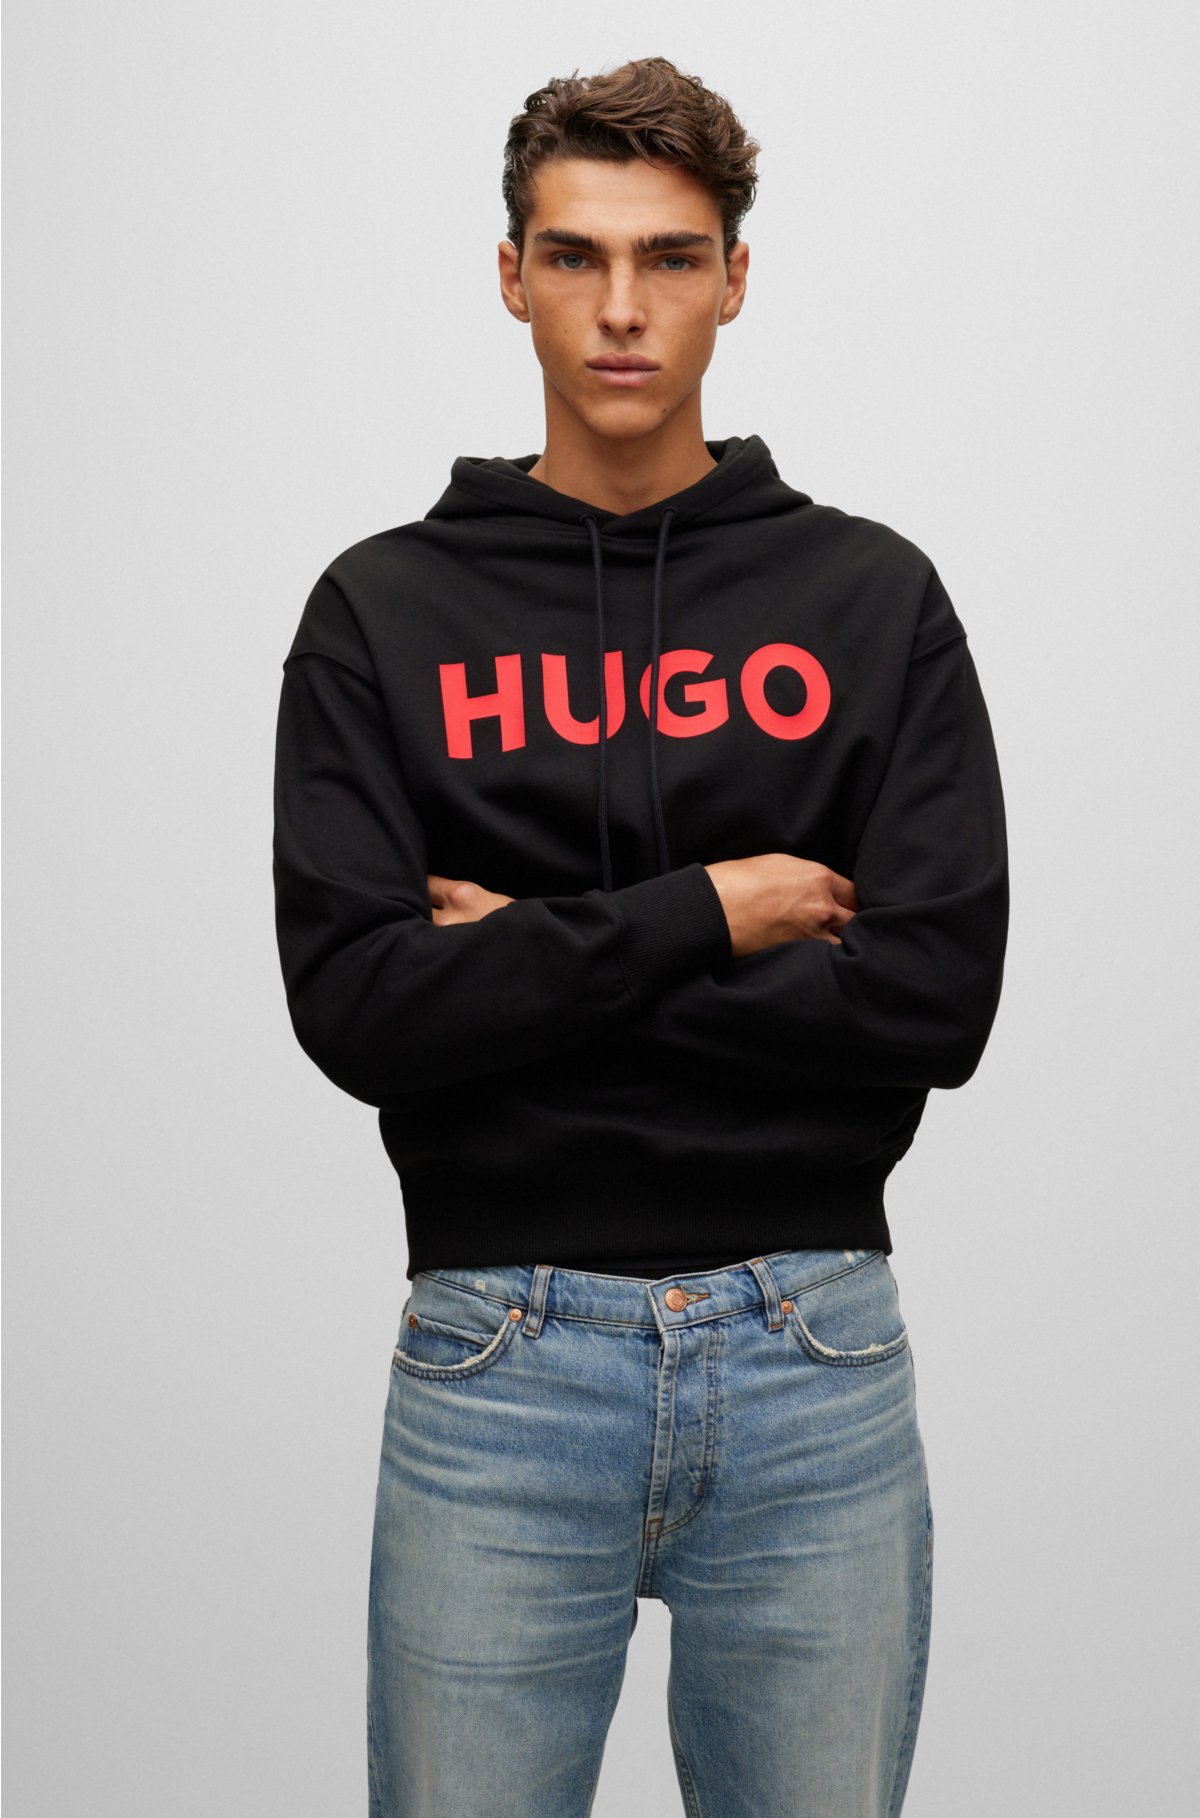 HUGO - All-gender relaxed-fit hoodie